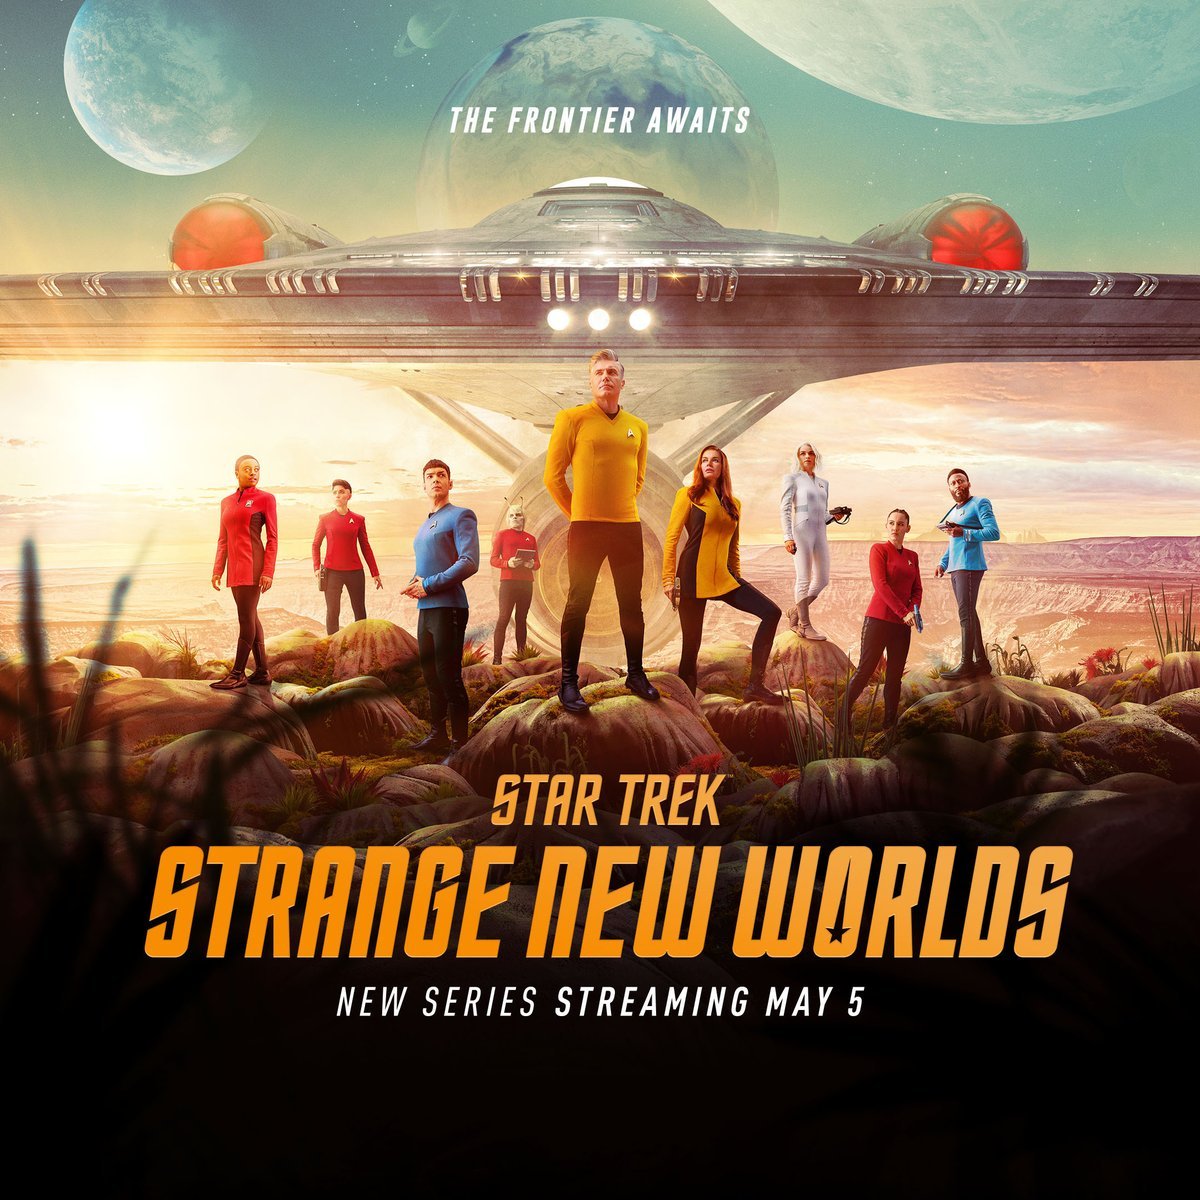 Star Trek: Strange New Worlds | Novo trailer da Paramount Plus com Anson Mount, Rebecca Romijn e Ethan Peck